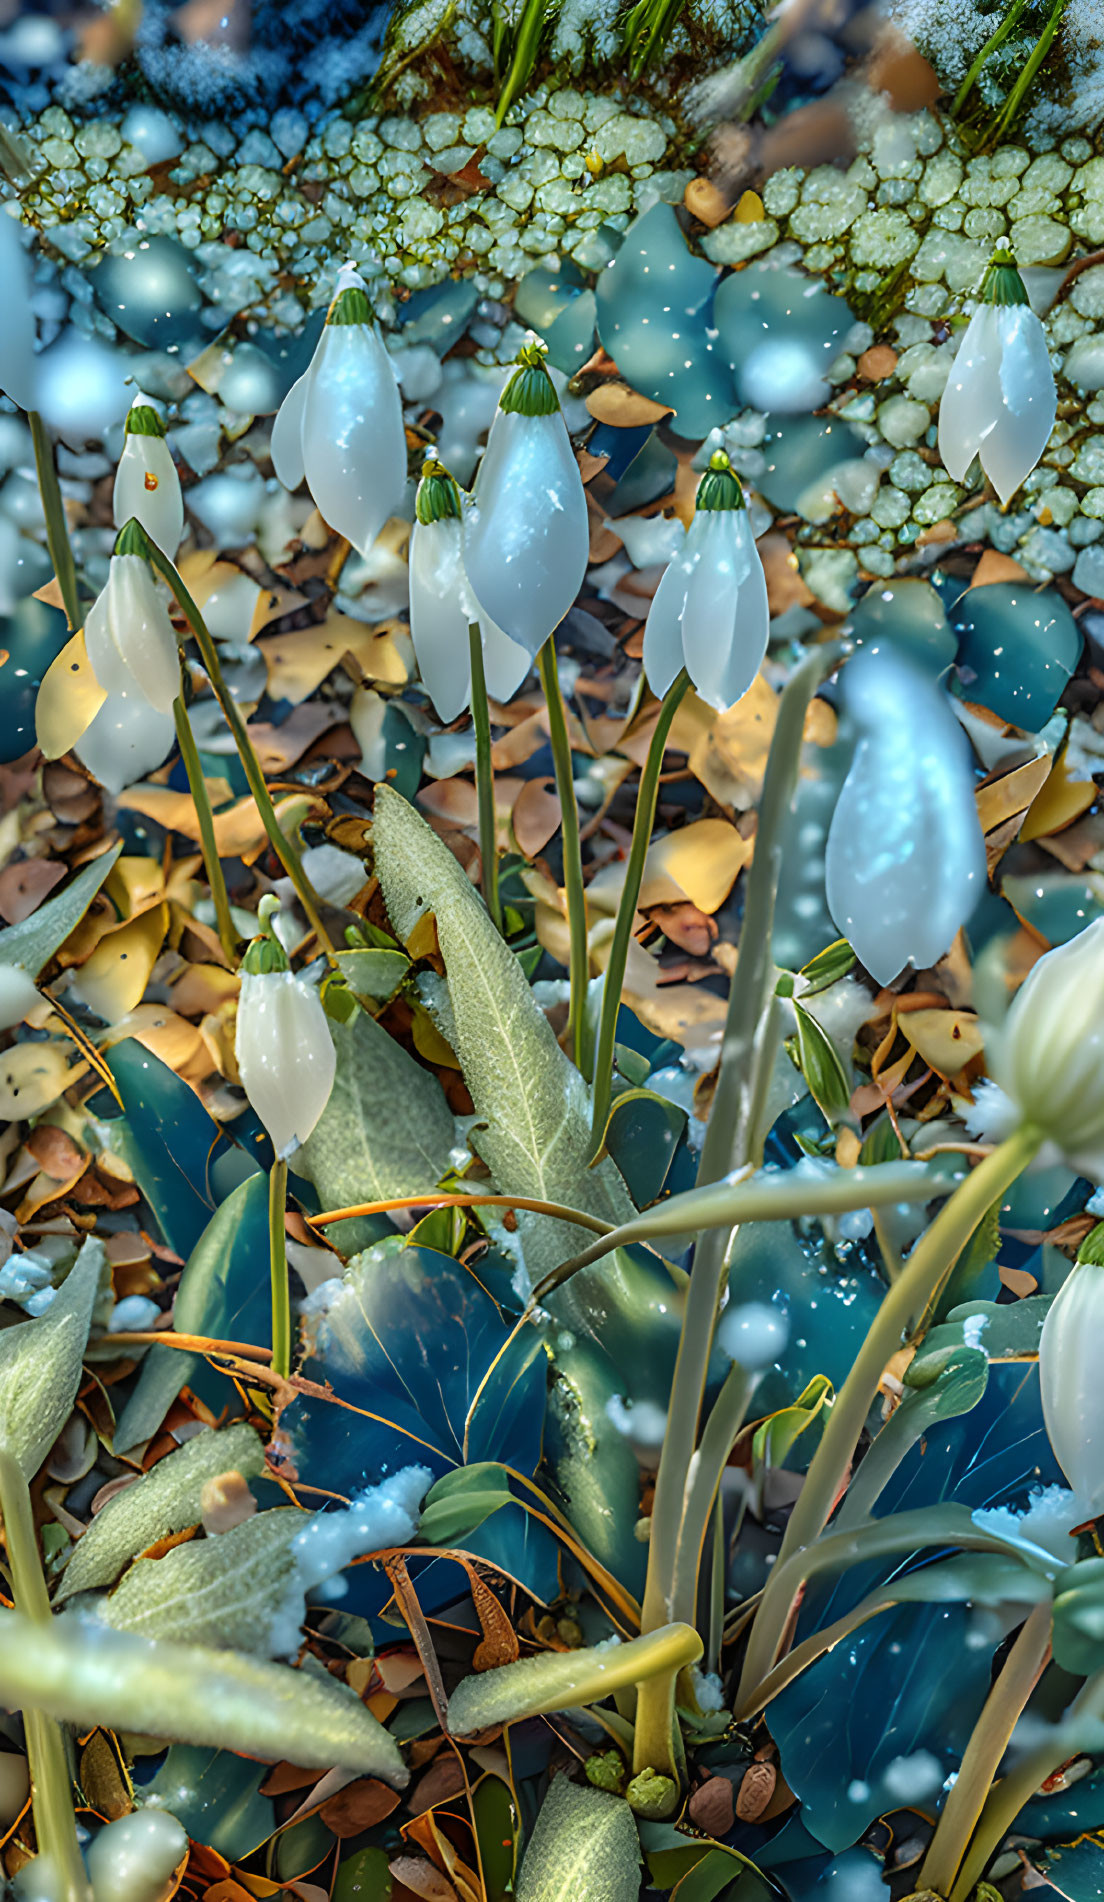 White Snowdrop Flowers Among Fallen Leaves in Sunlight